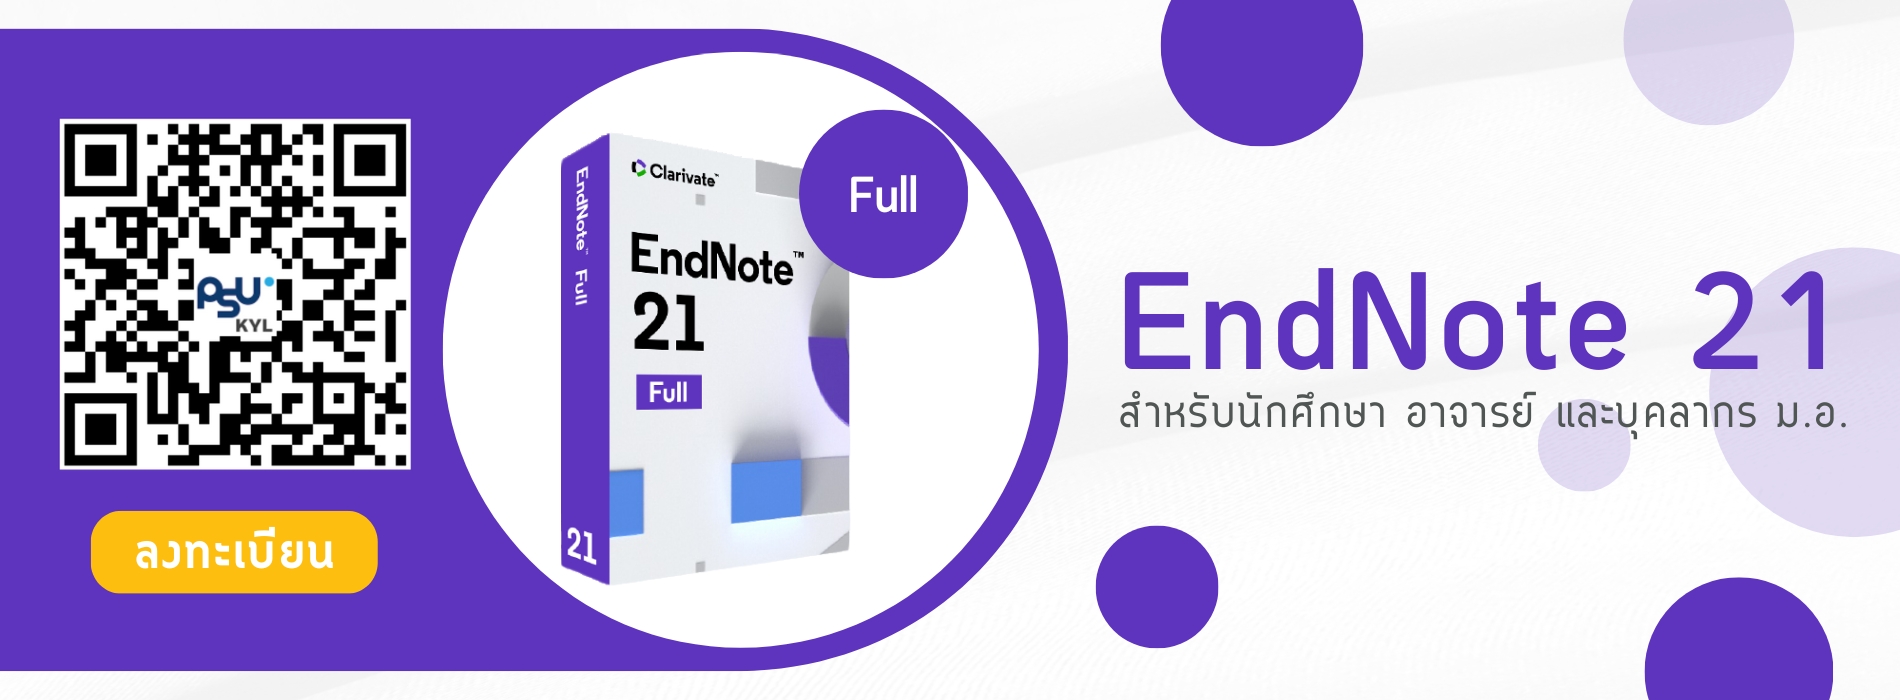 You are currently viewing โปรแกรมจัดการรายการบรรณานุกรม EndNote 21 สำหรับนักศึกษา อาจารย์ และบุคลากร ม.อ.